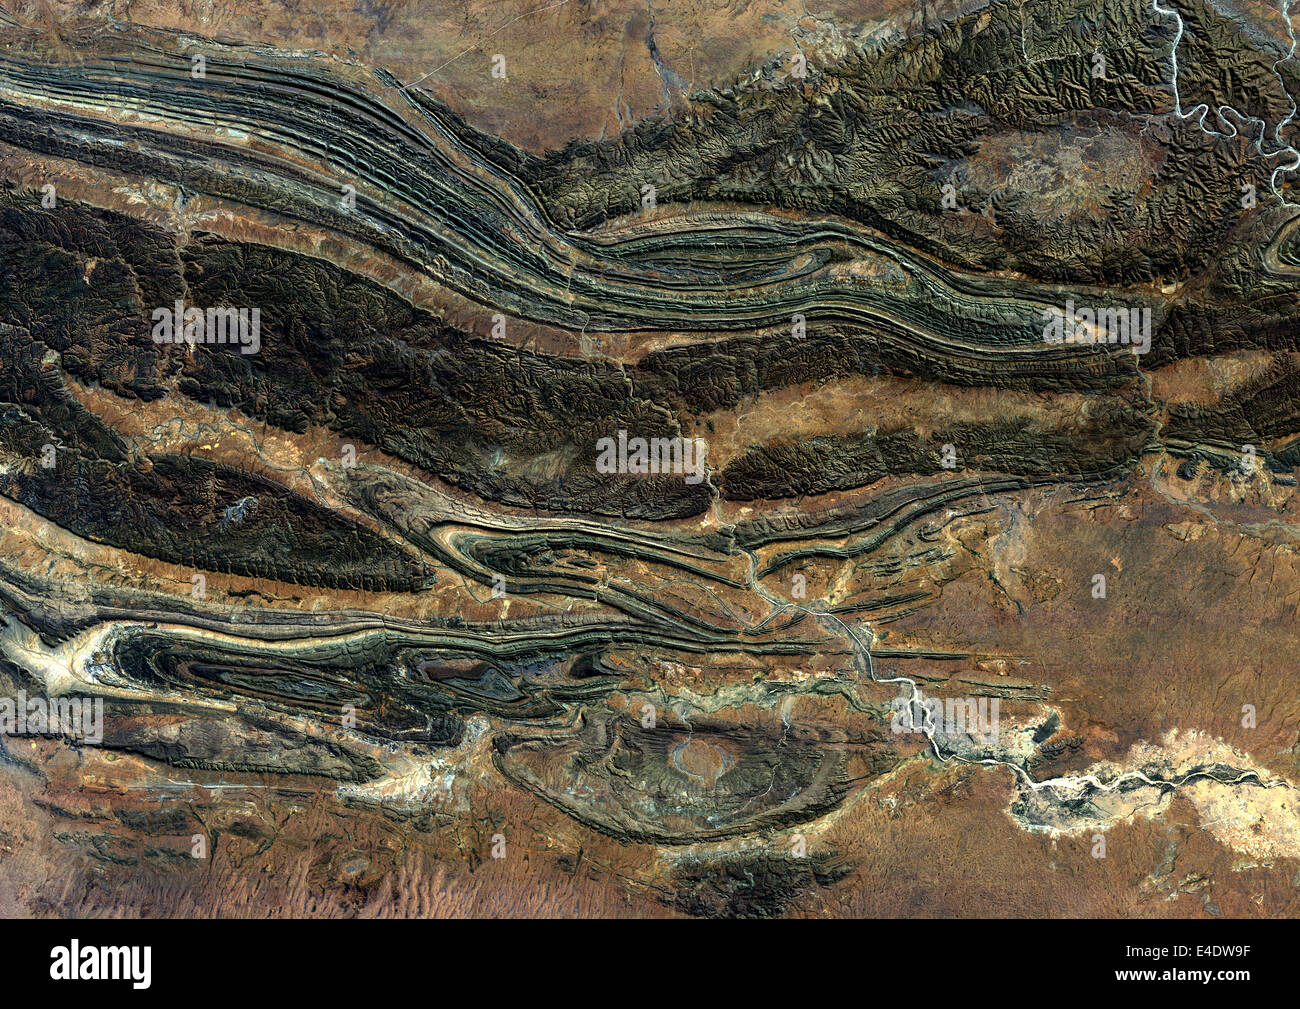 Macdonnell, George Hill Range, Australien, Echtfarben-Satellitenbild Reittiere. Reittiere Macdonnell, Echtfarben-Satellitenbild. Also Stockfoto